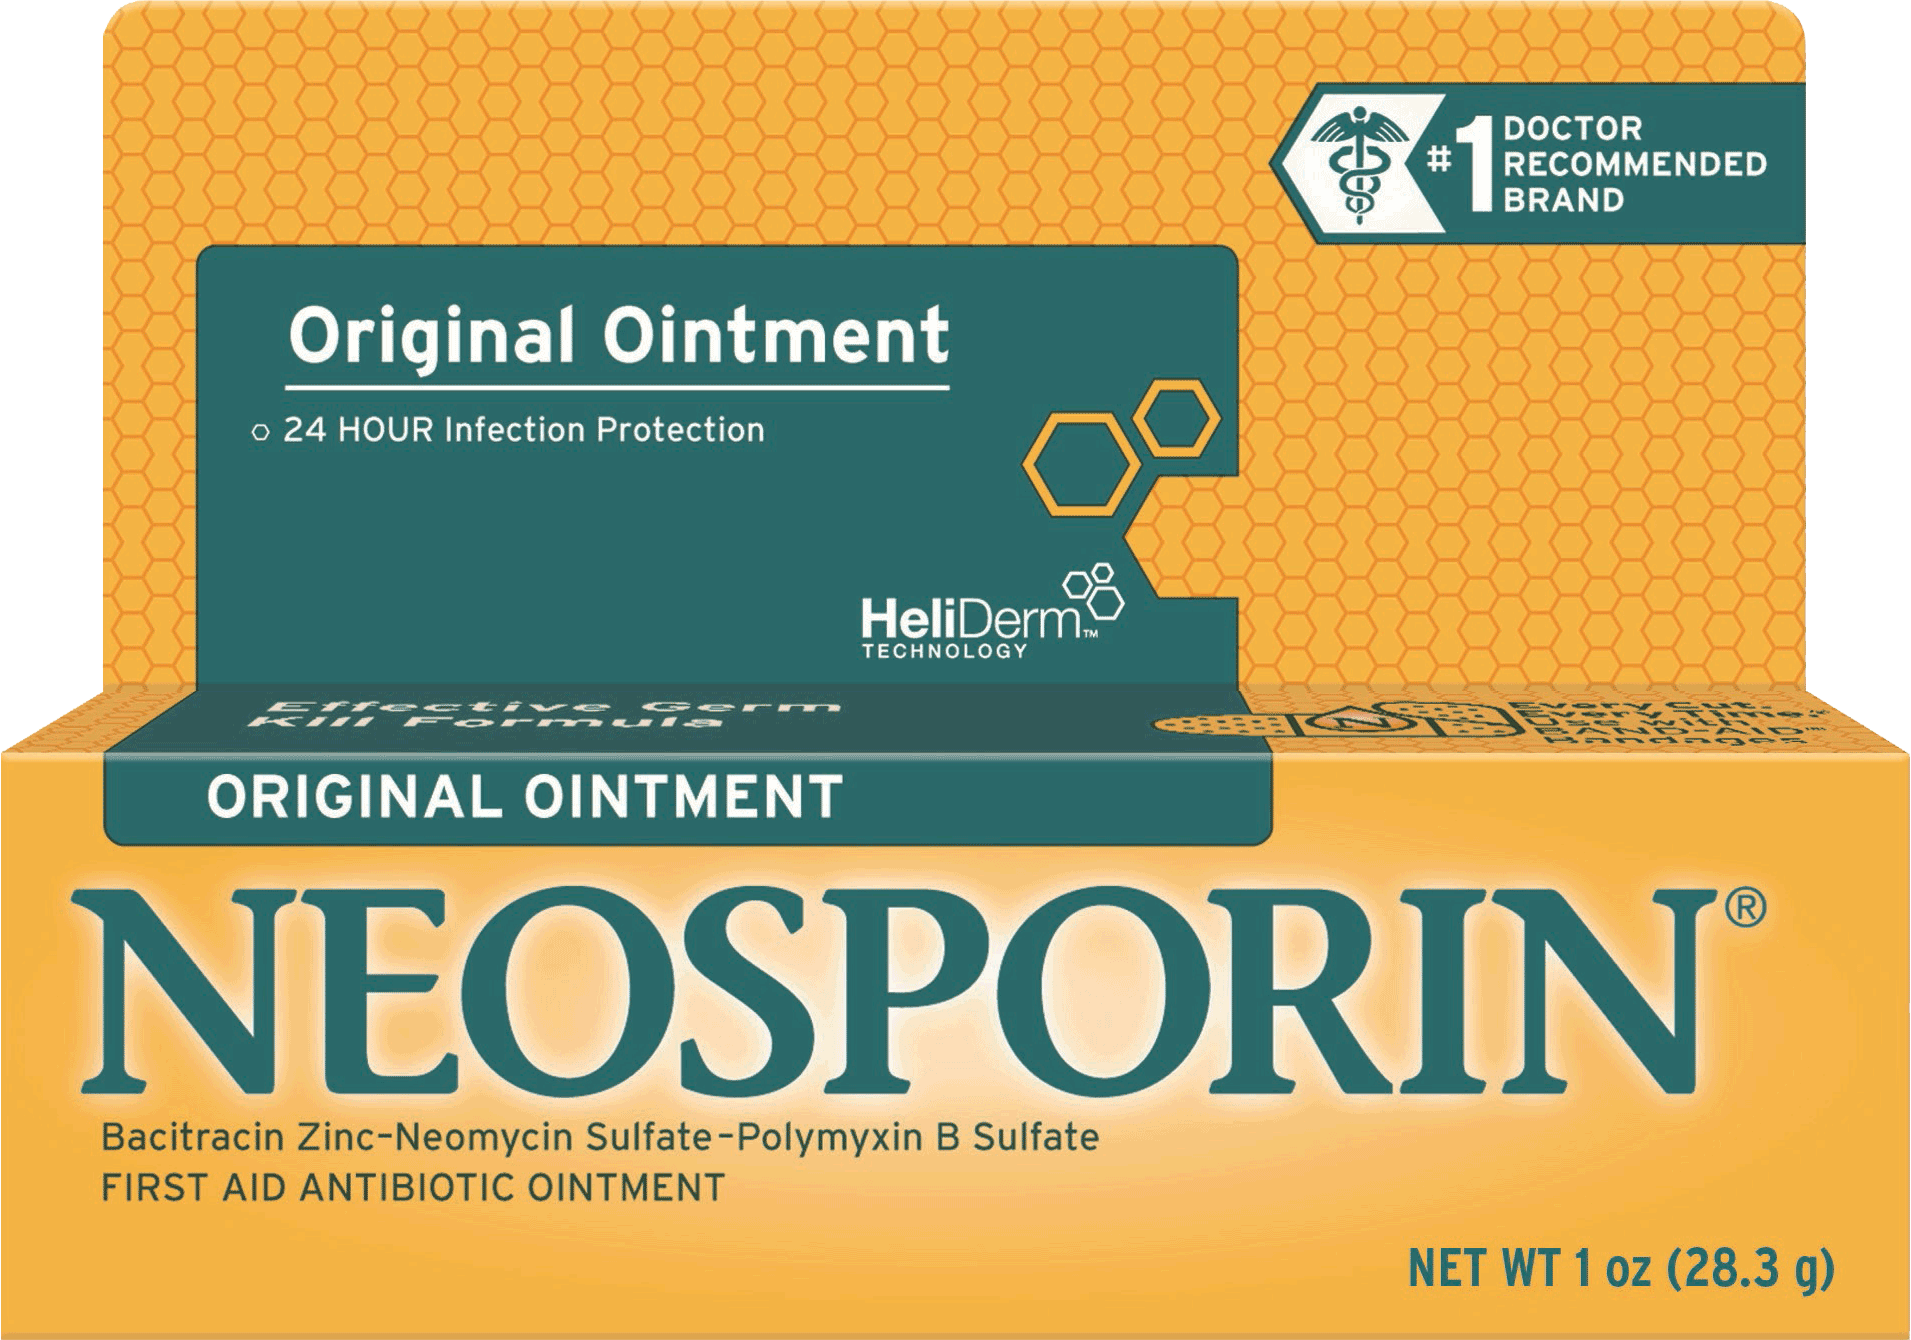 neosporin-original-ointment.png